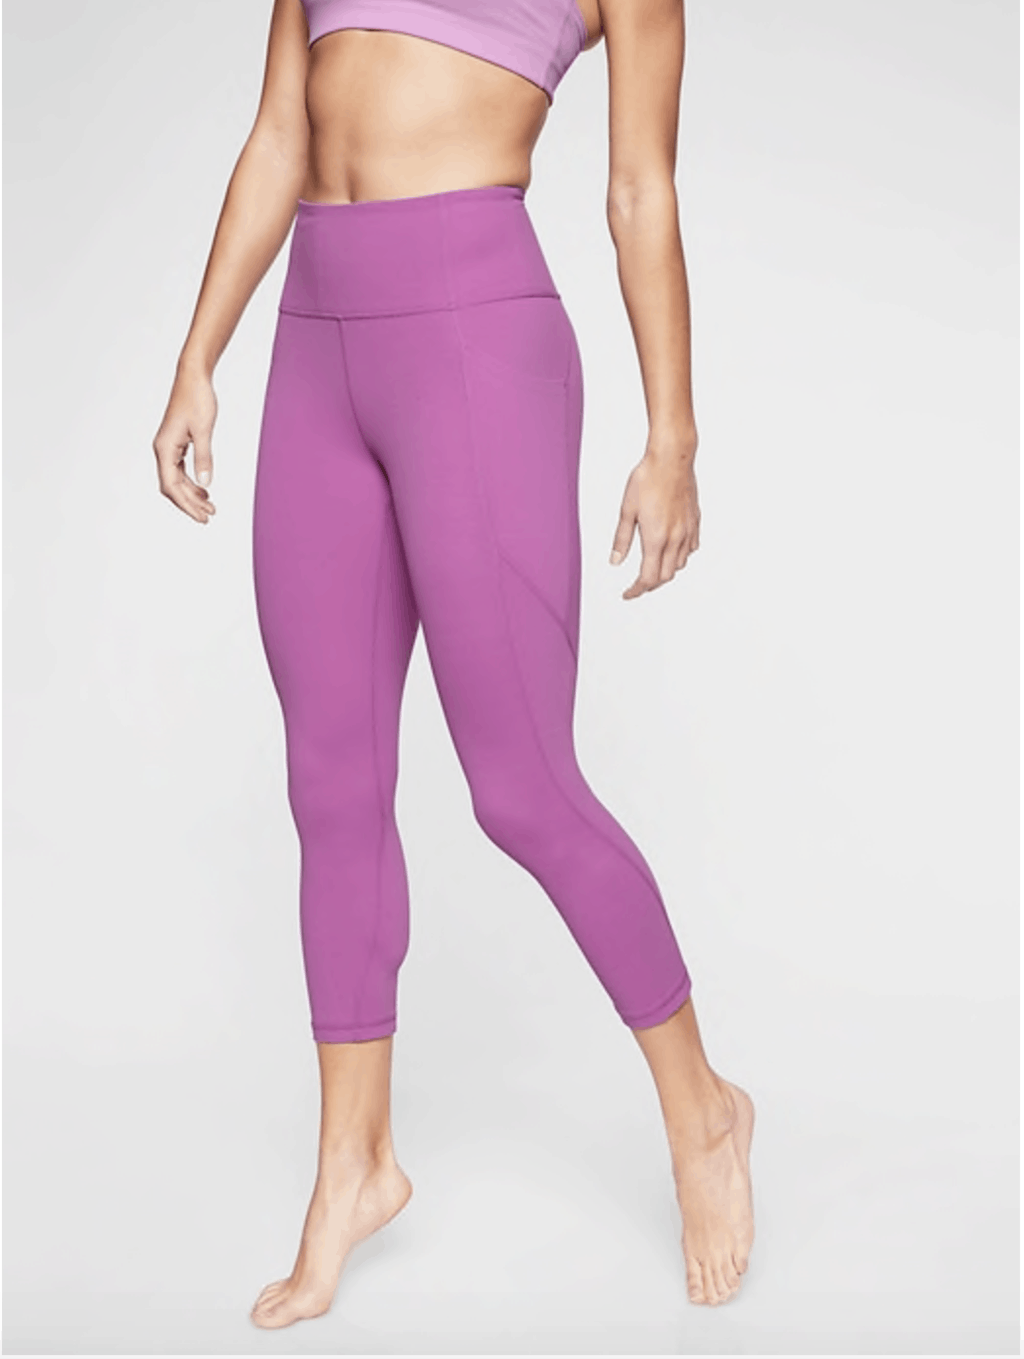 Purple workout leggings